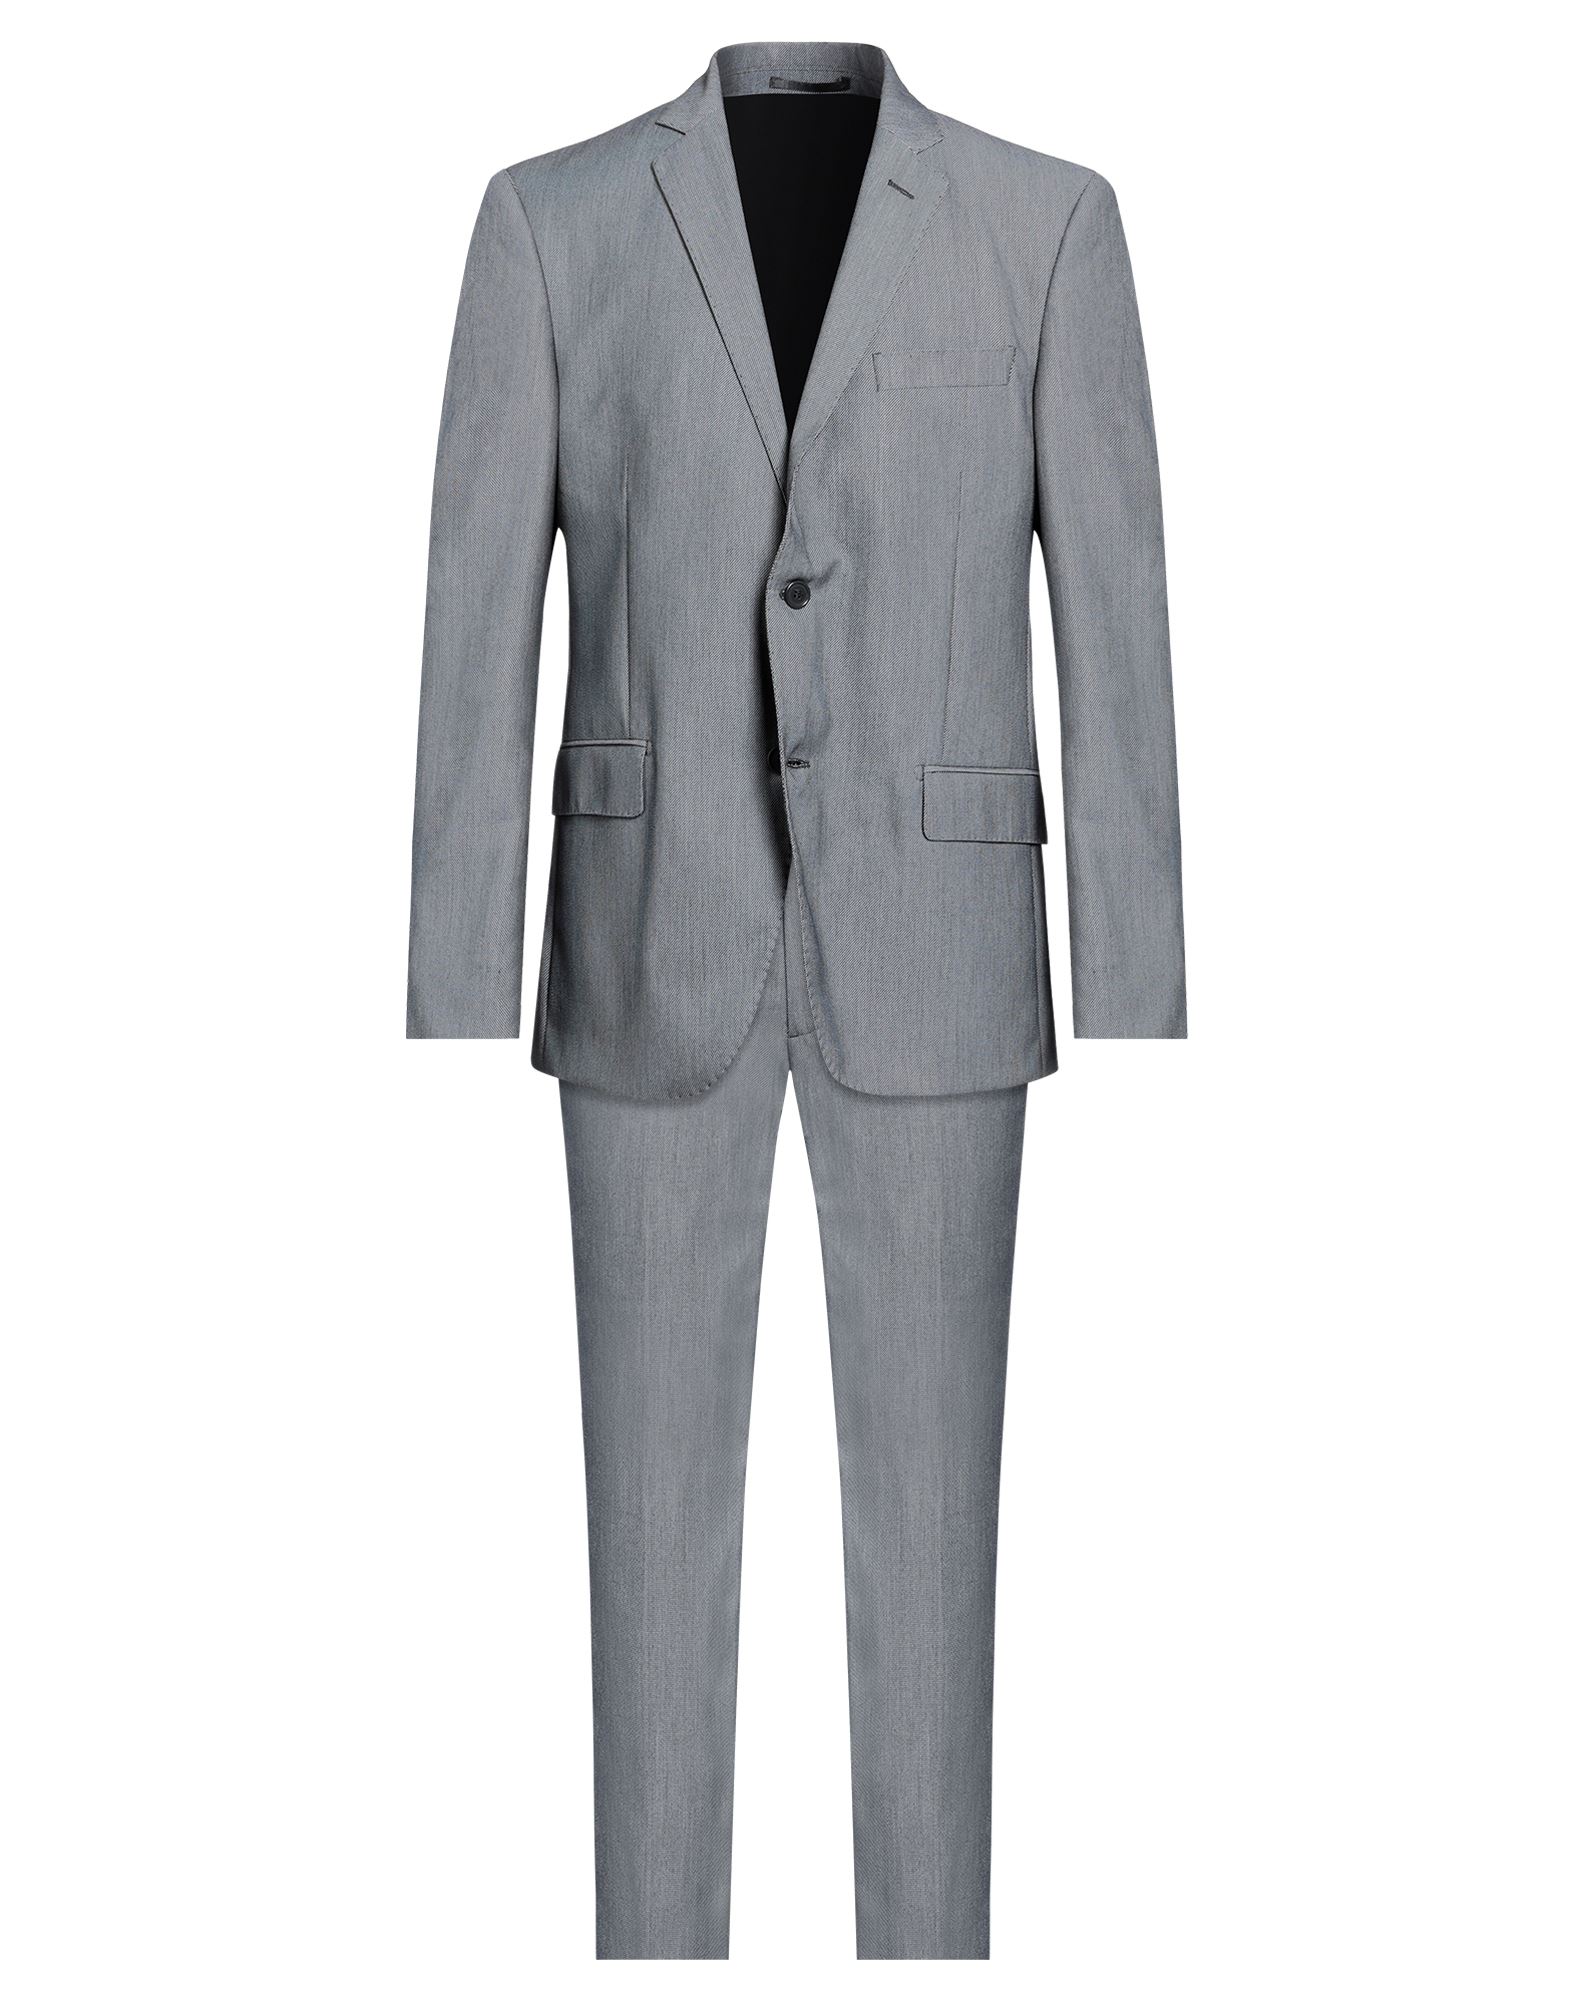 Alv By Alviero Martini Suits In Light Grey